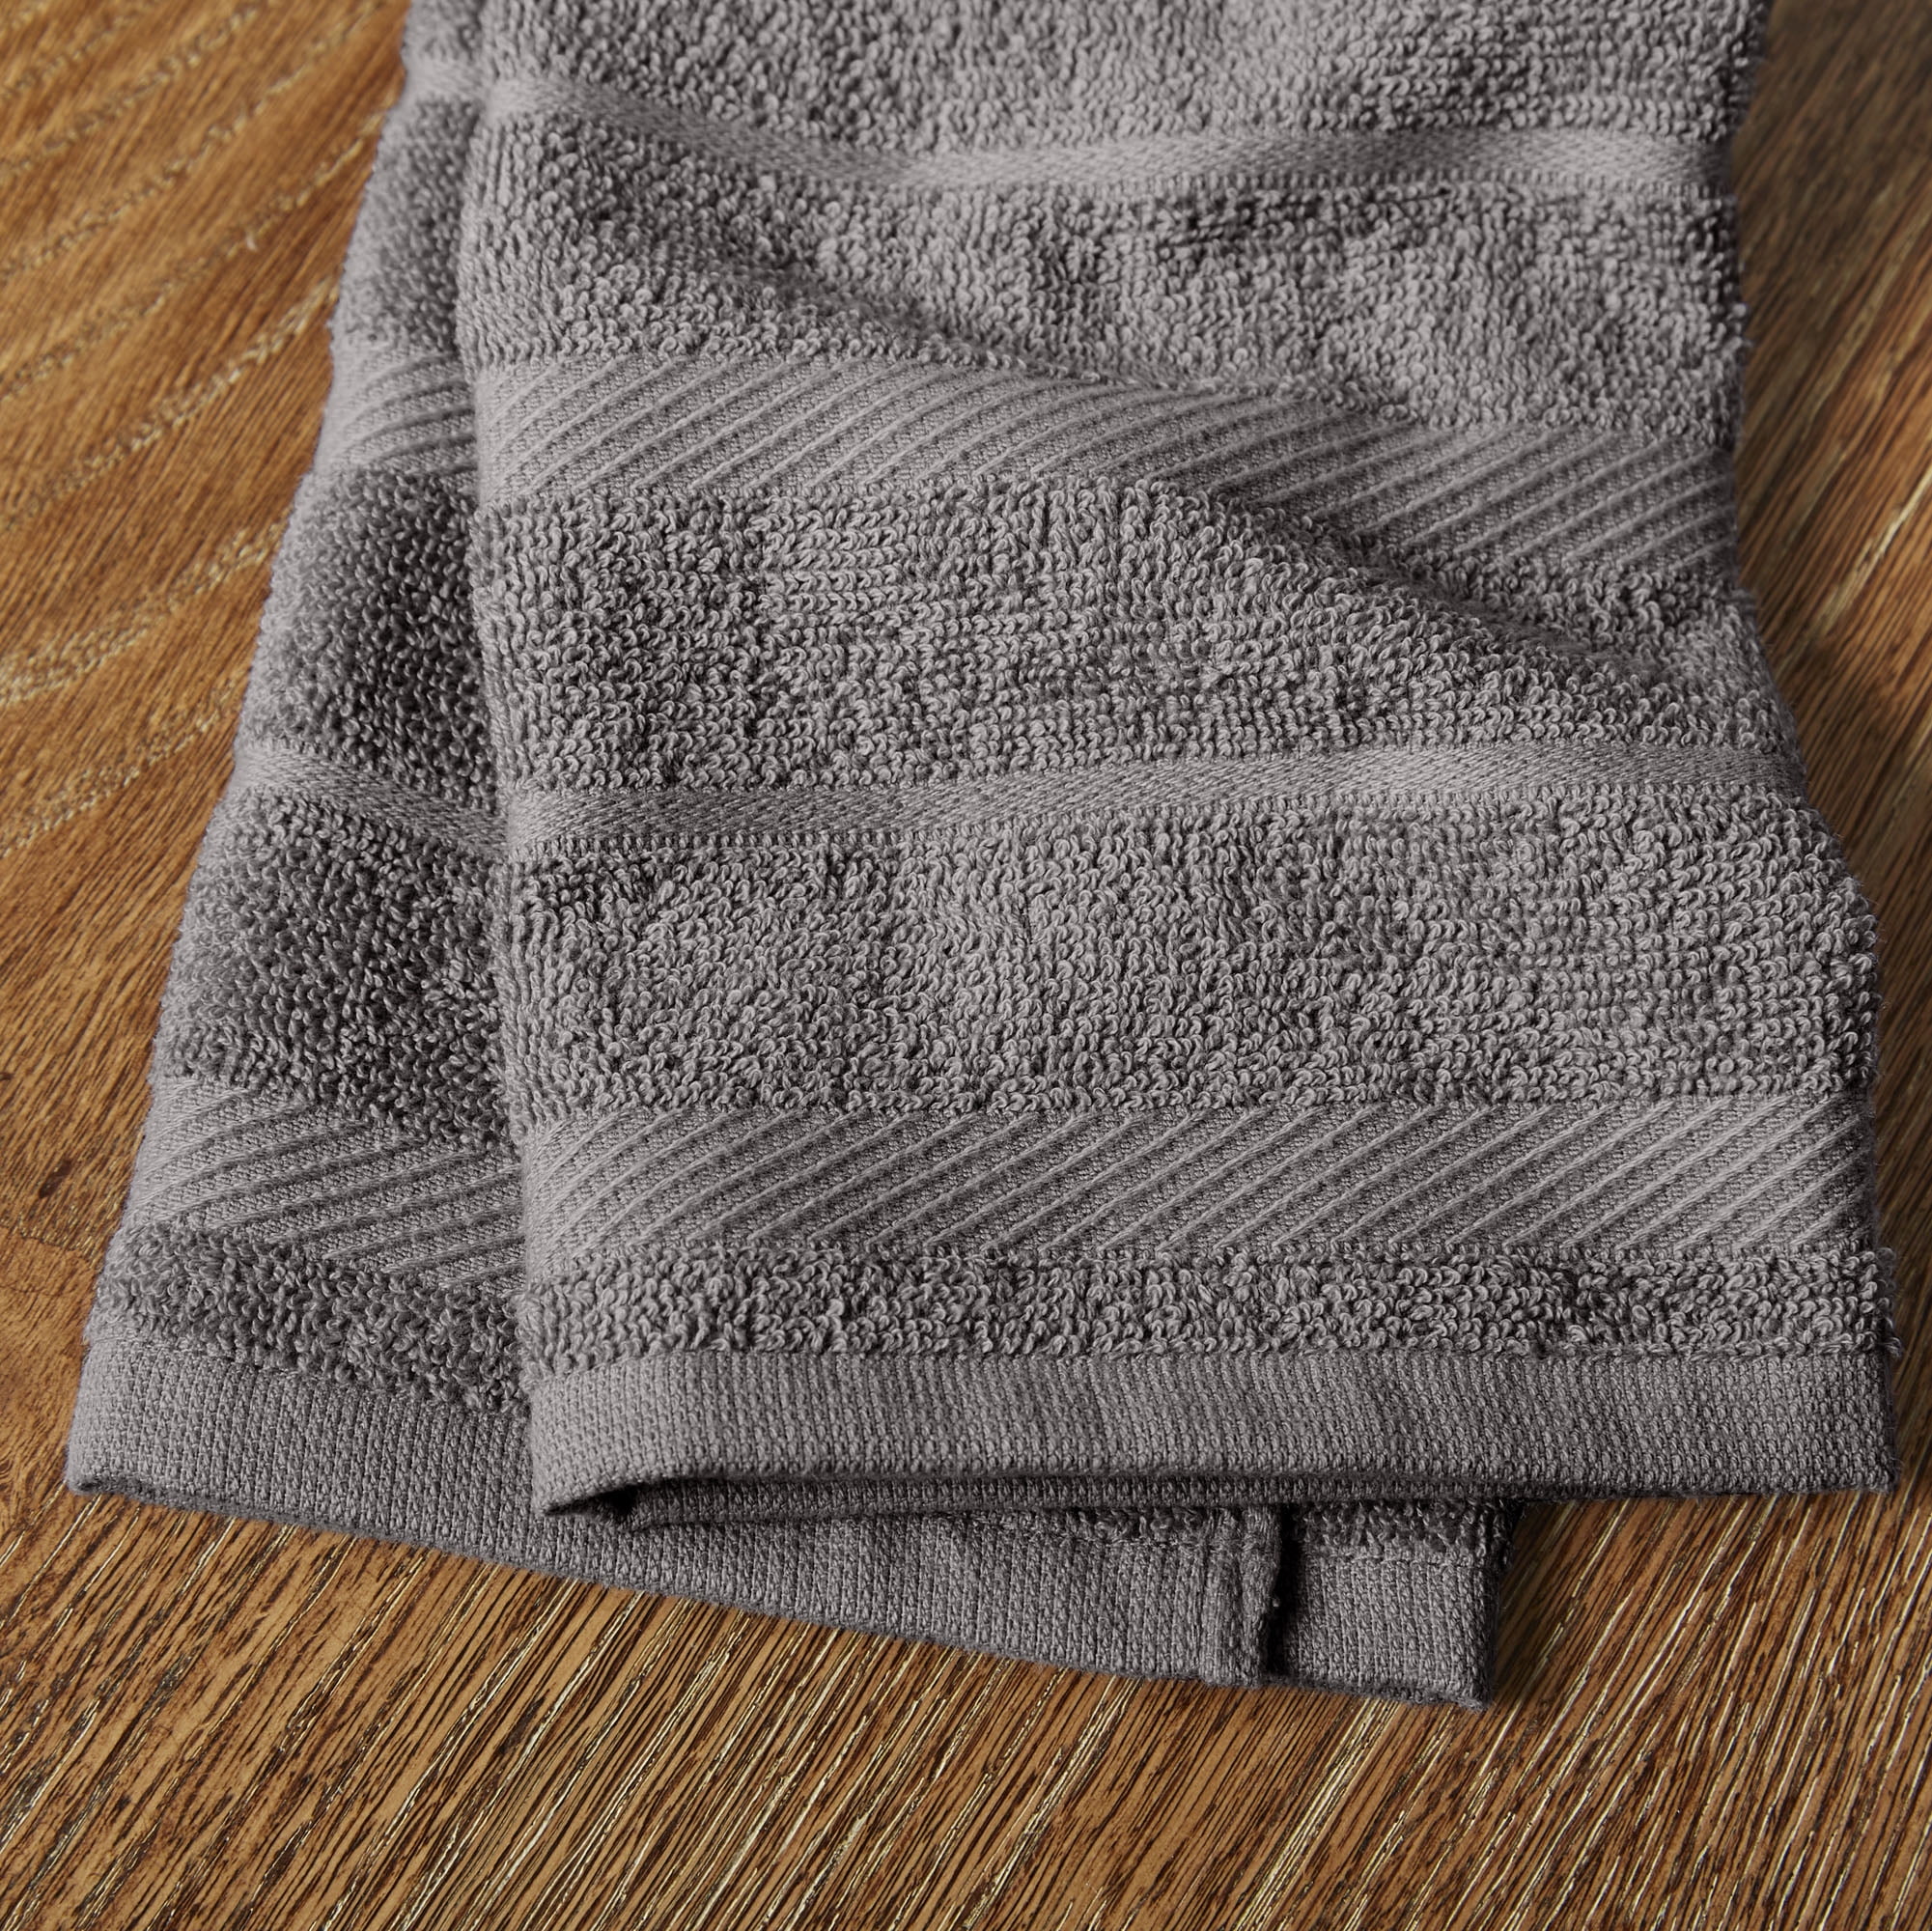 KitchenAid Albany Kitchen Towel 4-Pack Set - Dried Rose